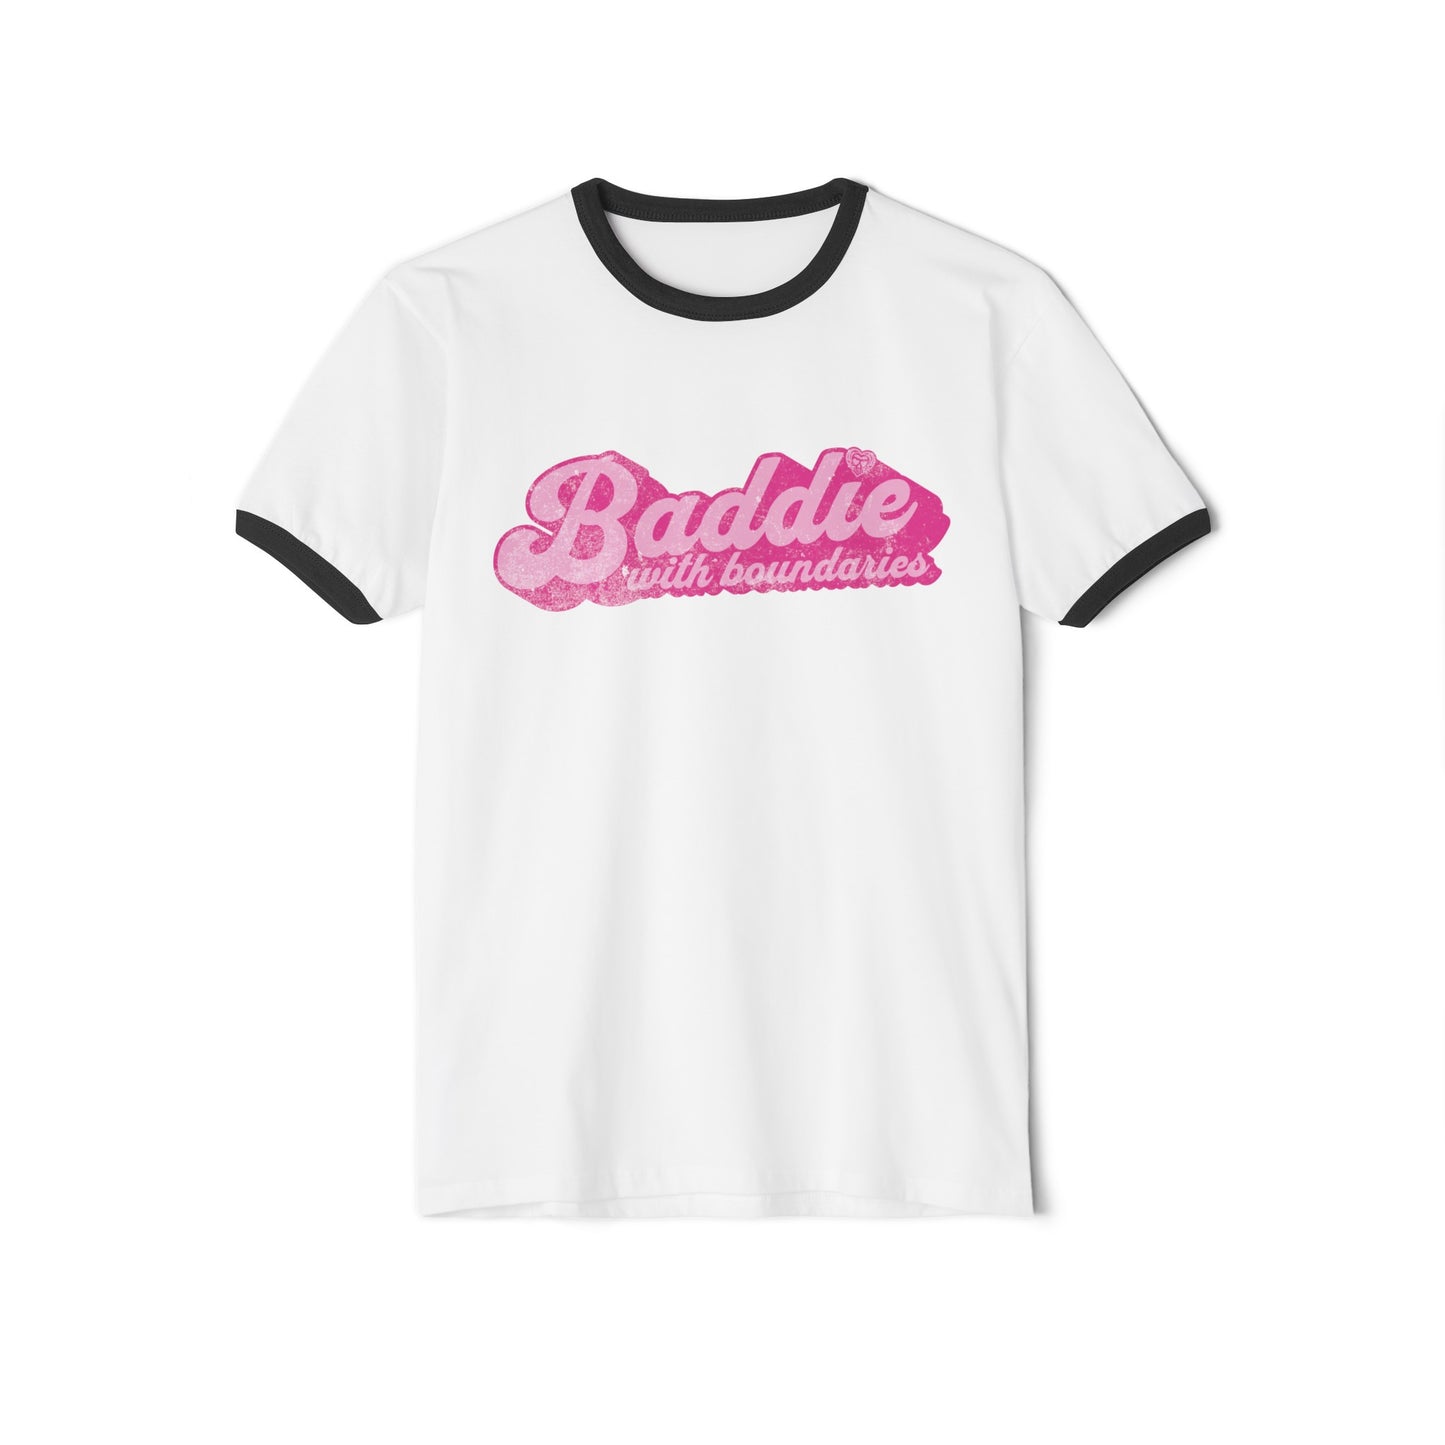 Baddie with Boundaries Ringer T-Shirt White Black